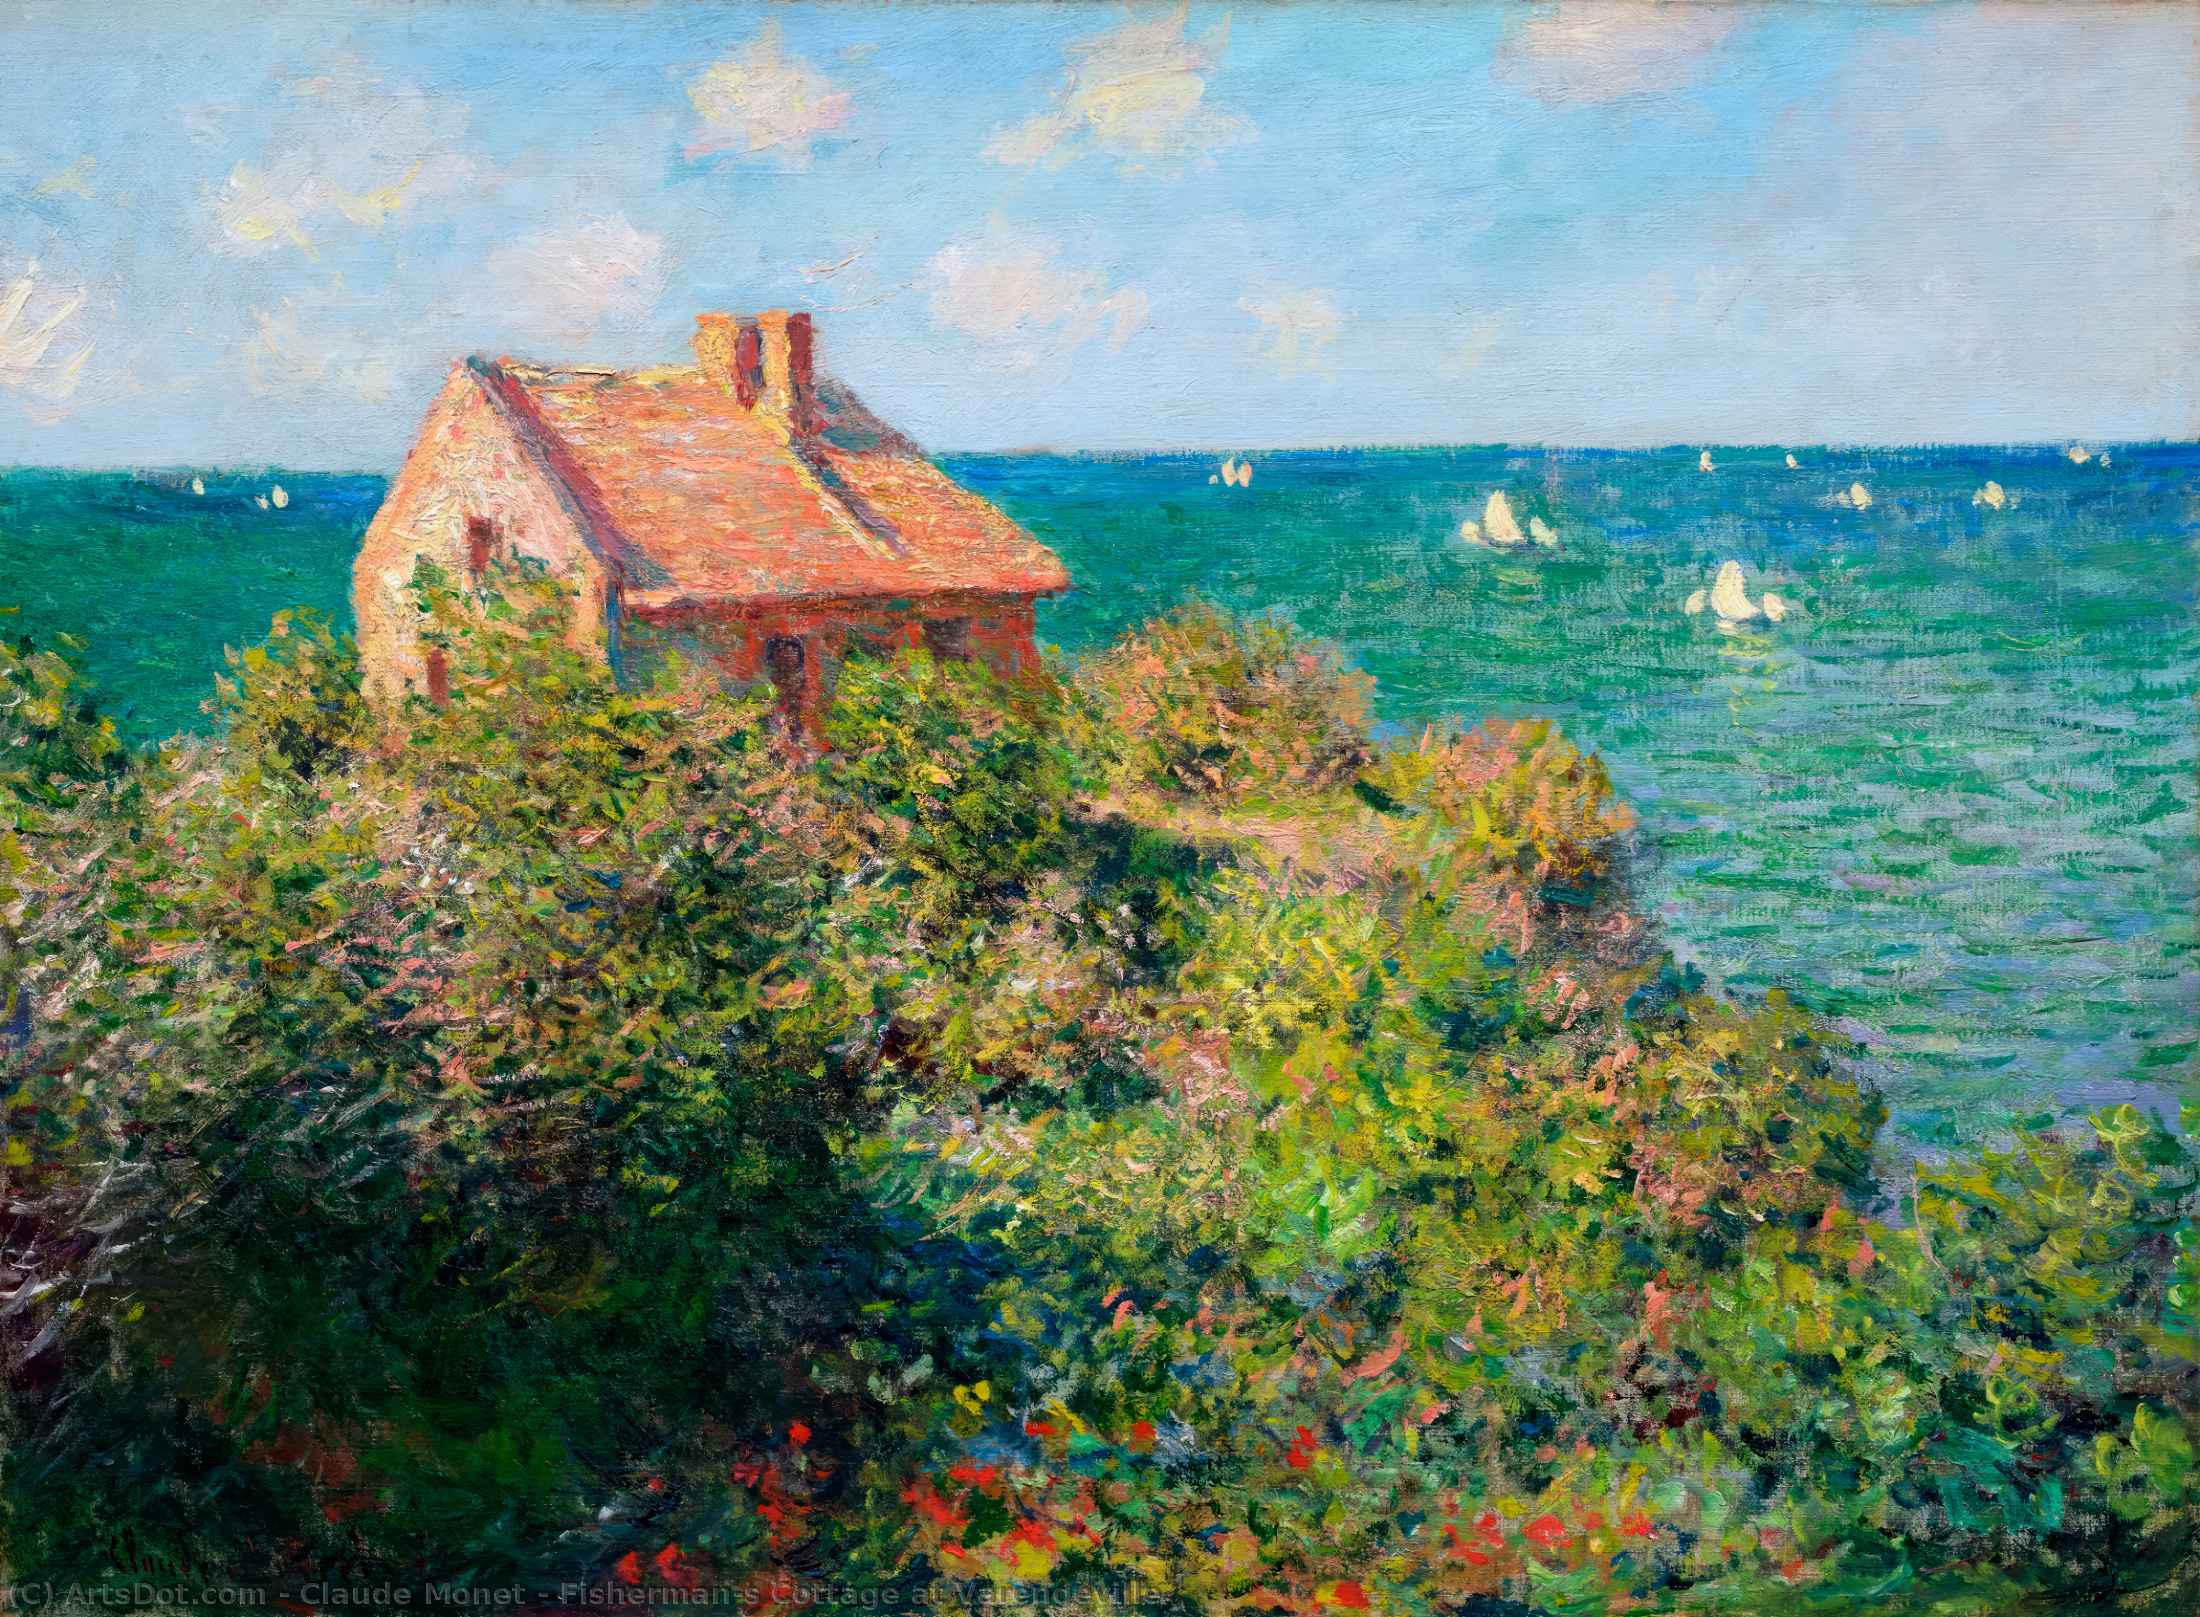 Wikioo.org - Encyklopedia Sztuk Pięknych - Malarstwo, Grafika Claude Monet - Fisherman's Cottage at Varengeville